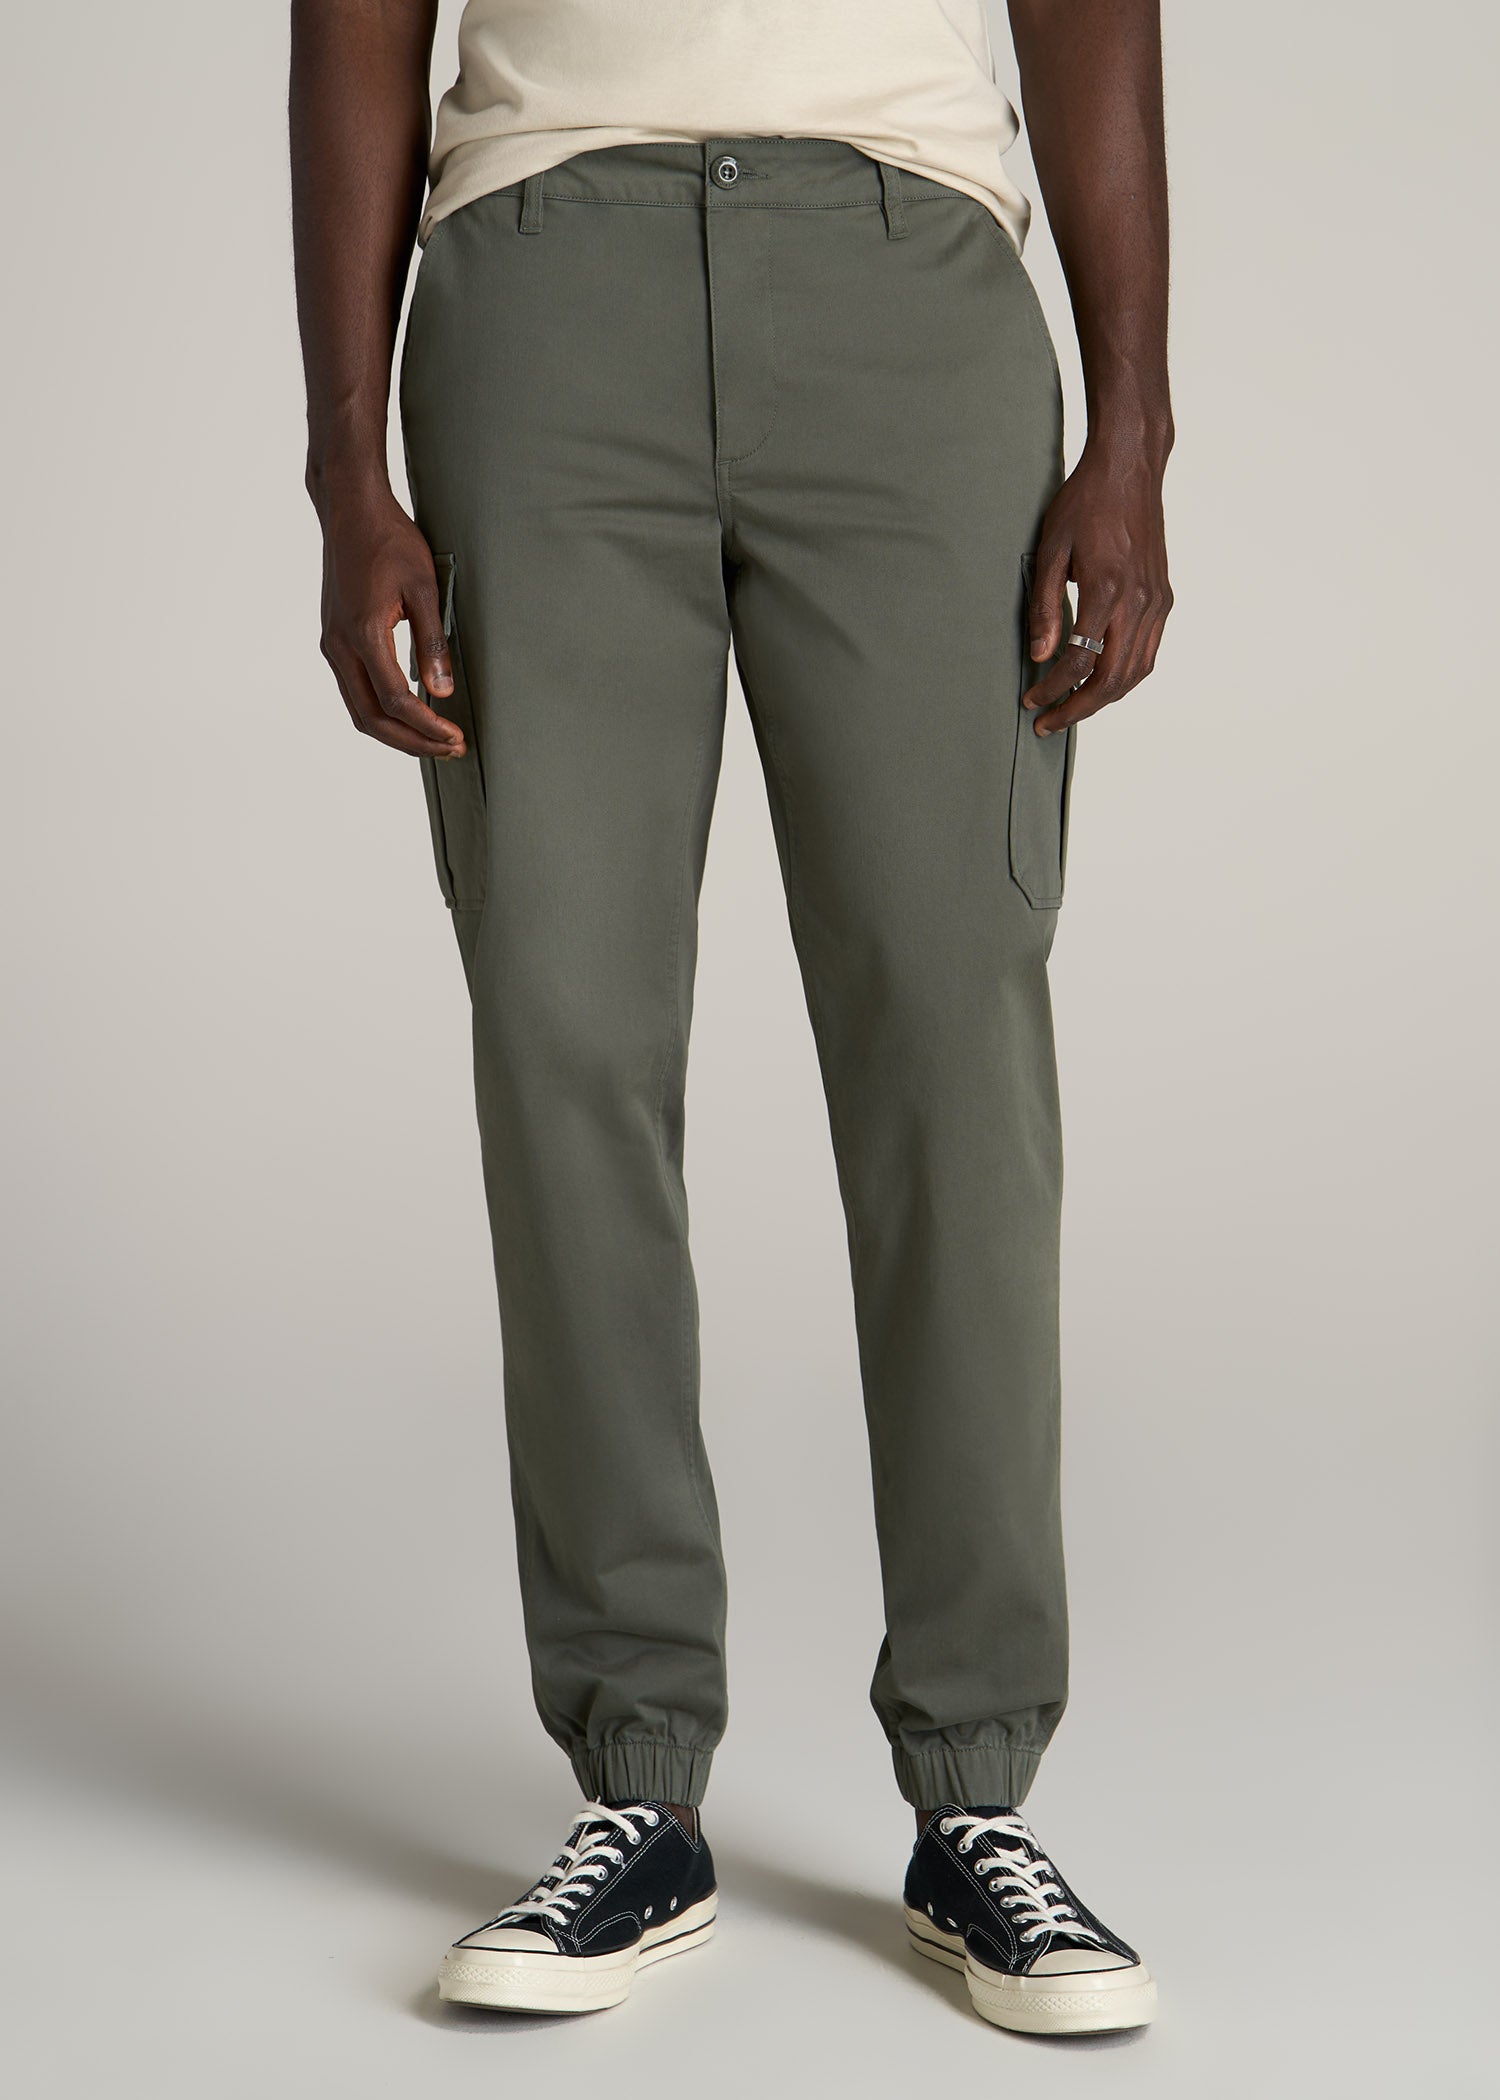 Cargo Pocket Jogger, Men's Trousers